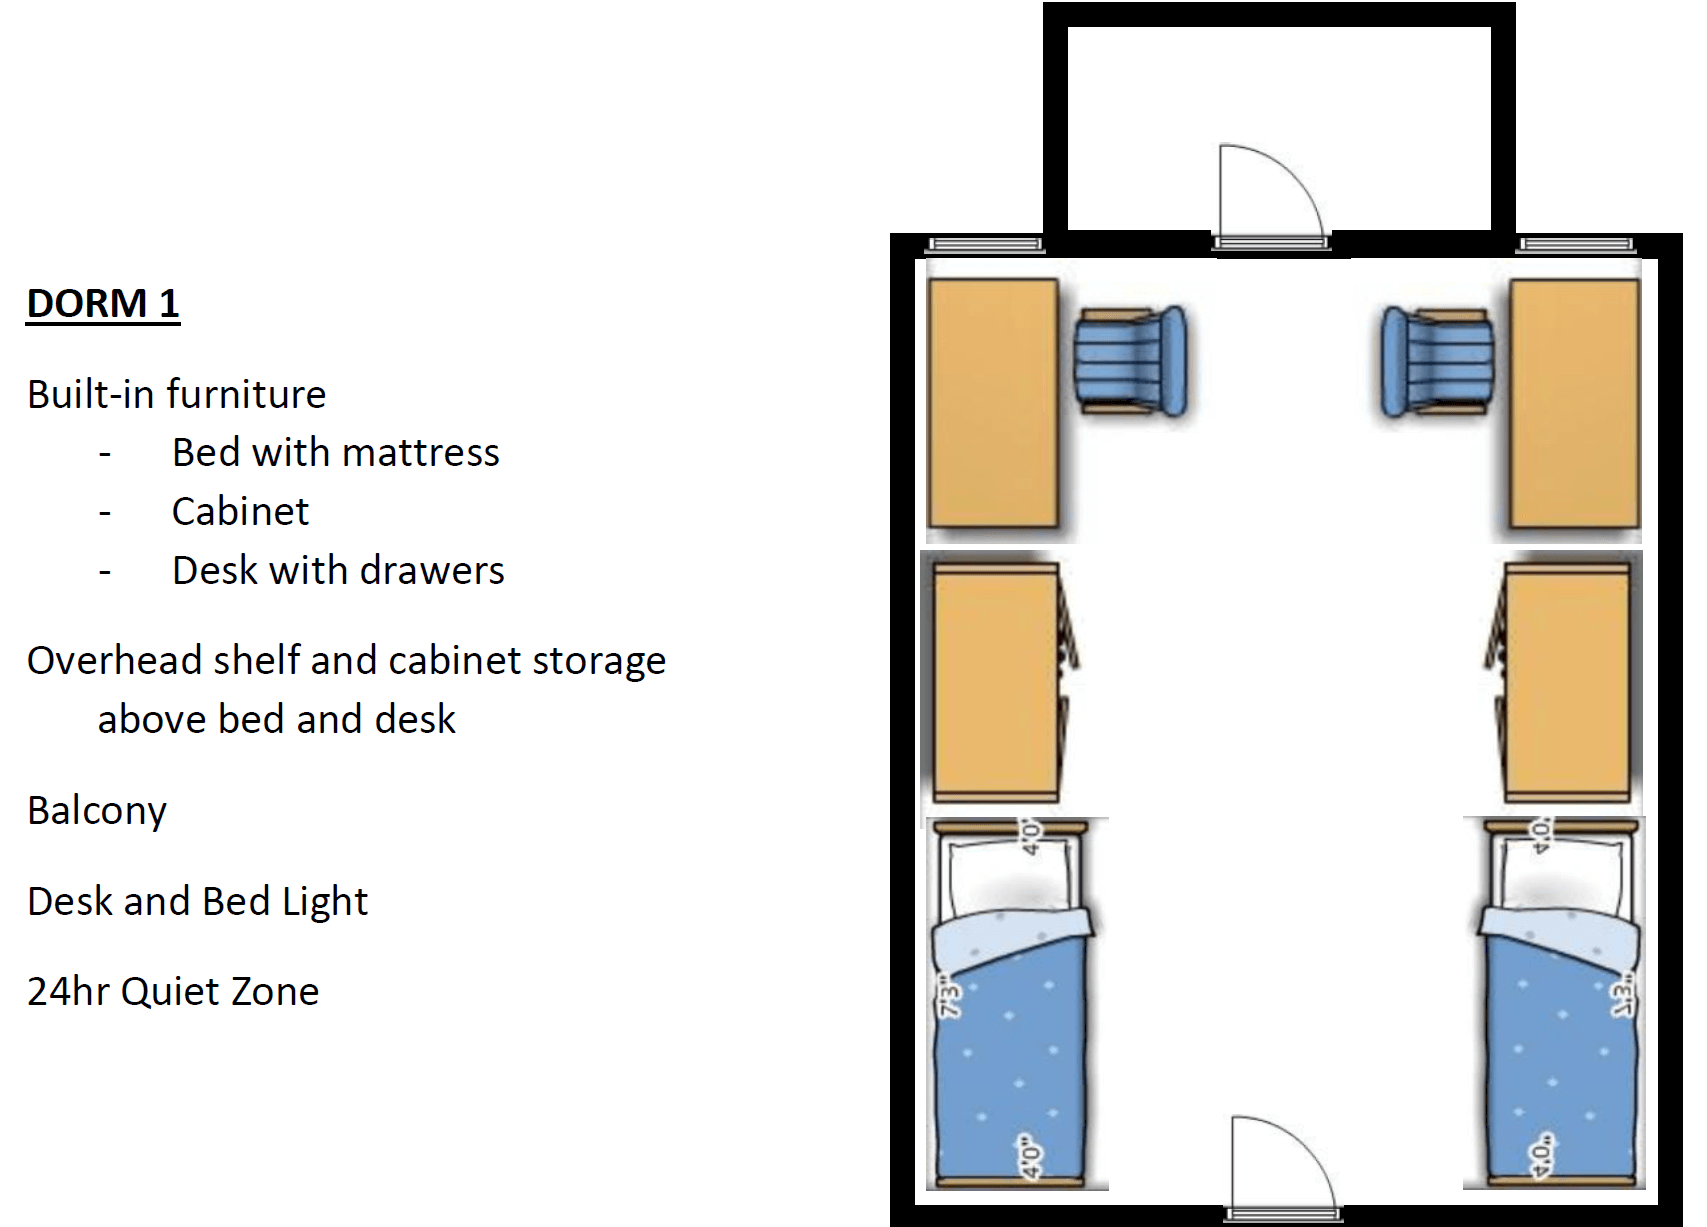 Dorm 1 layout